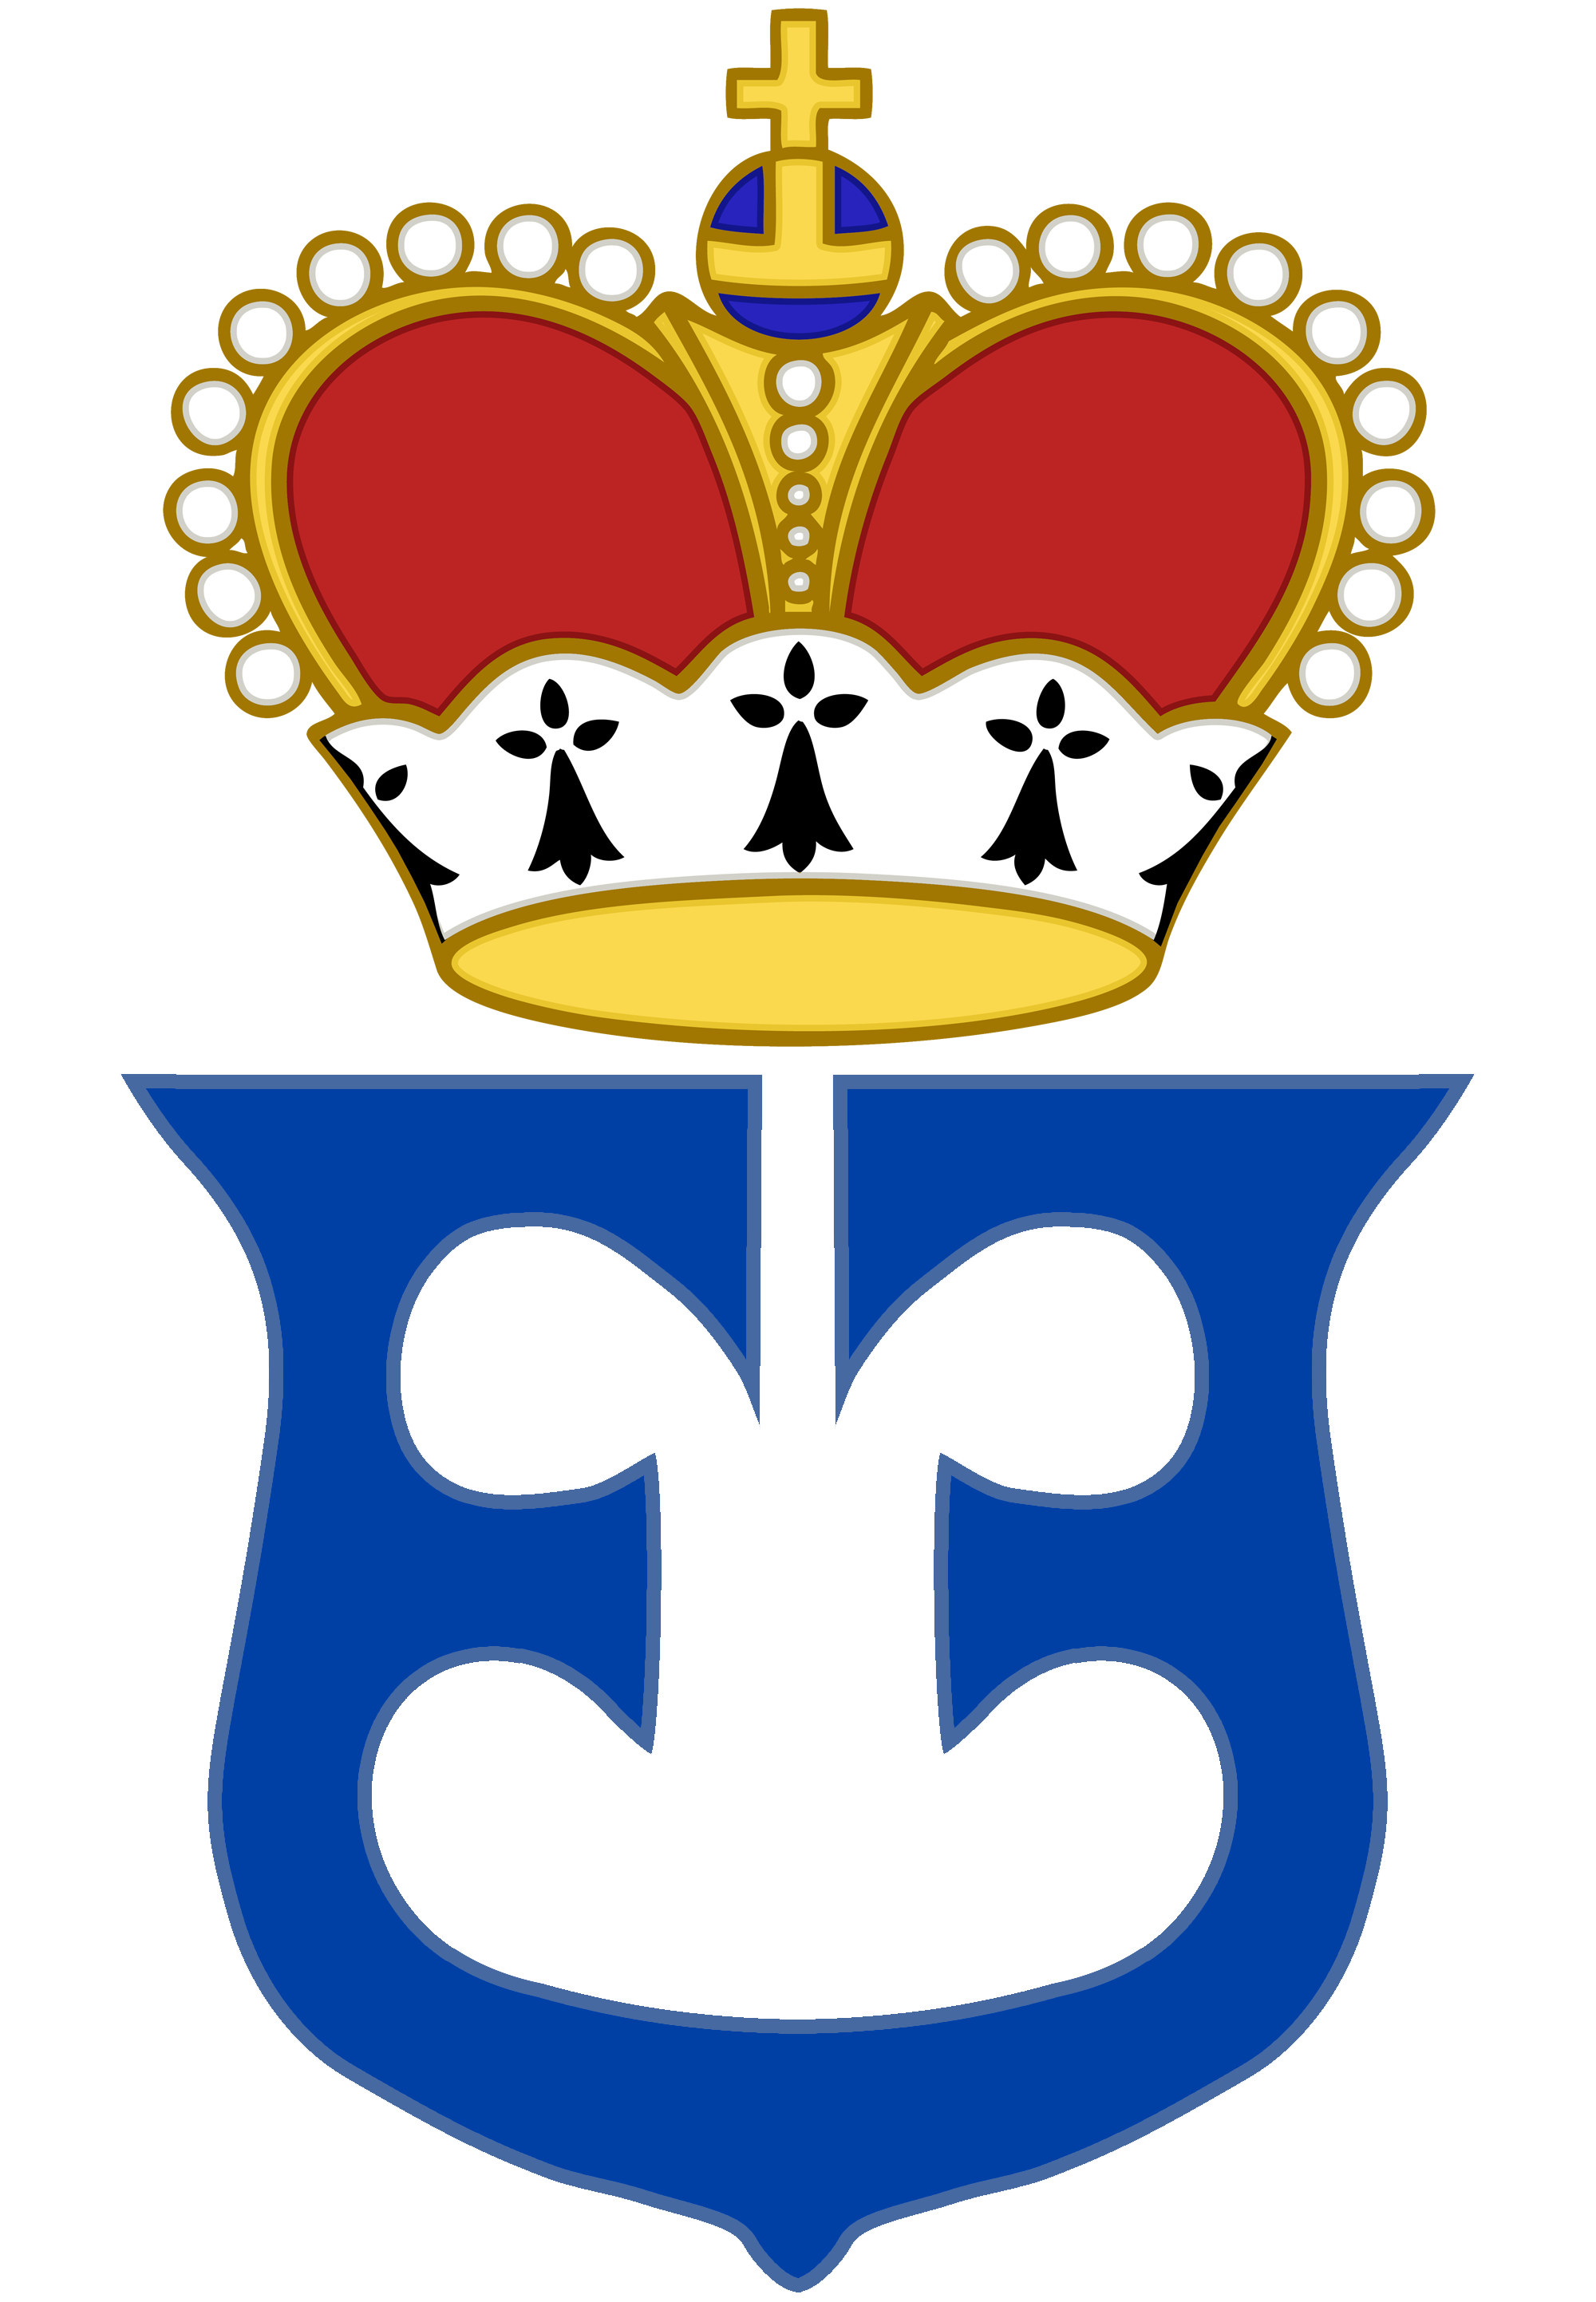 Symbols of royal self-fashioning: heraldry, badges and monograms